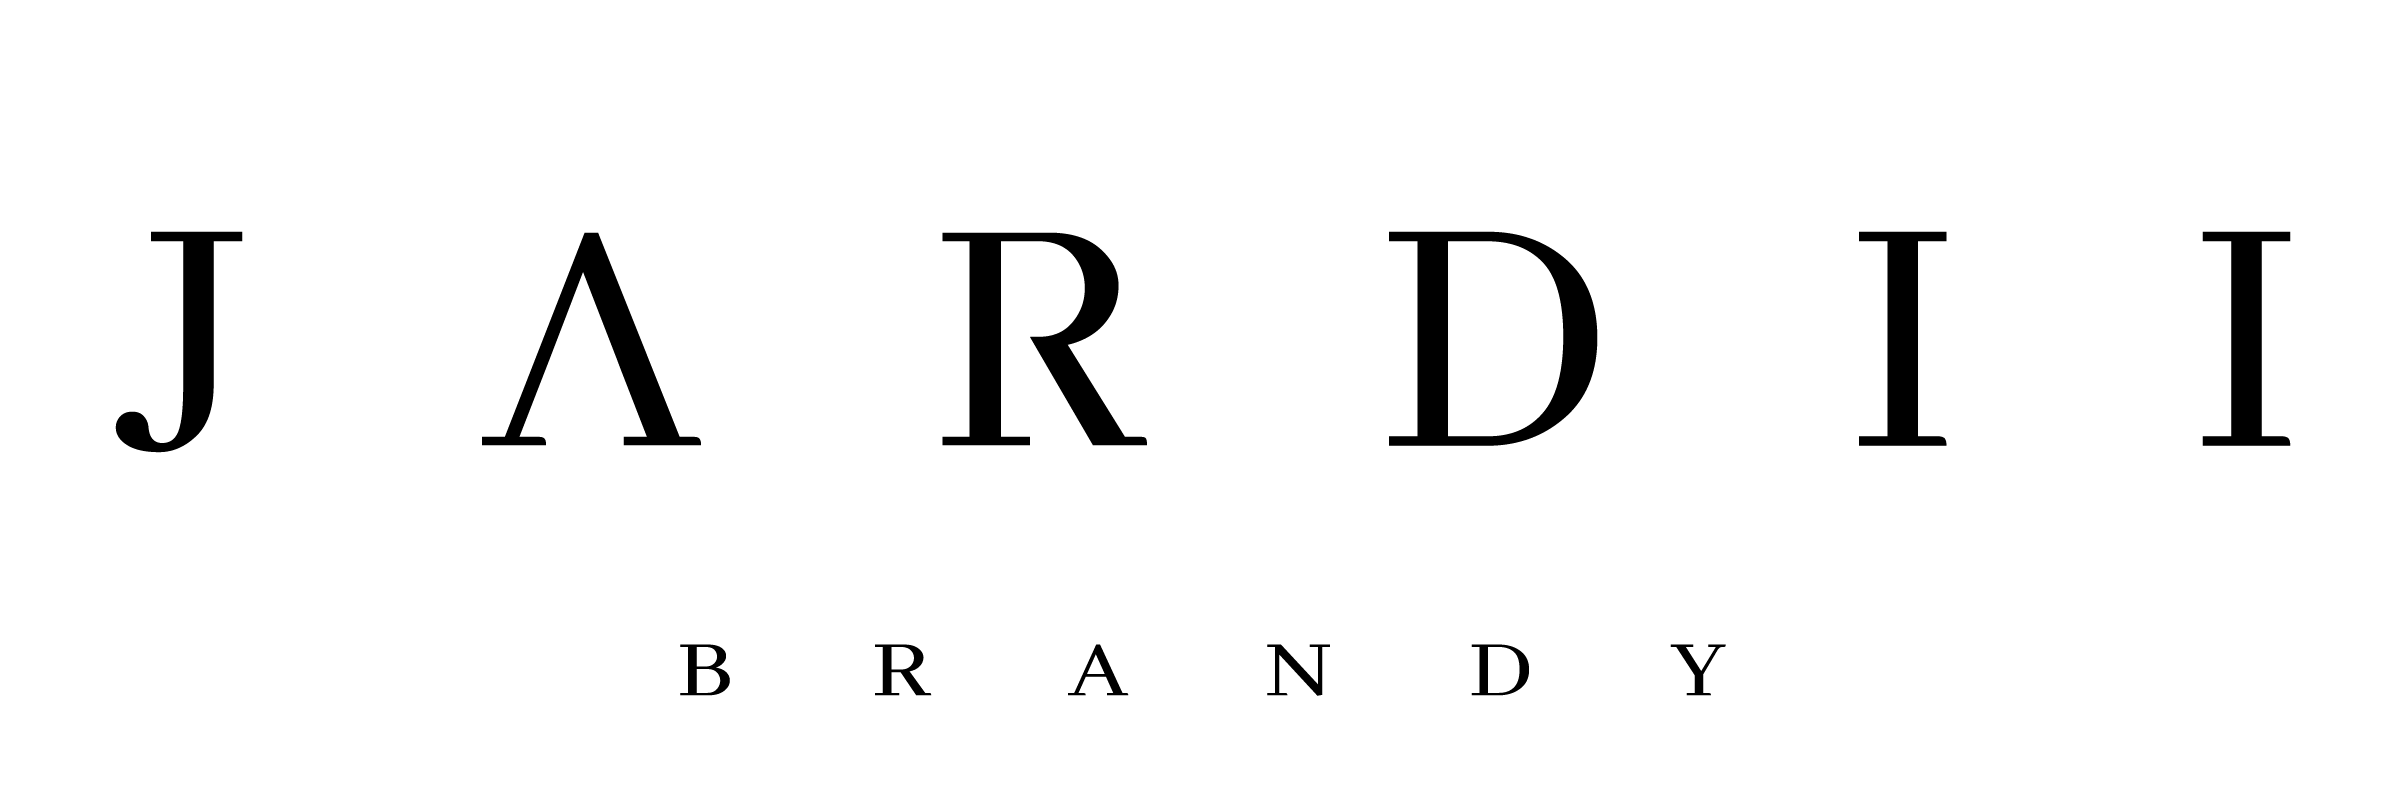 Jardii logo